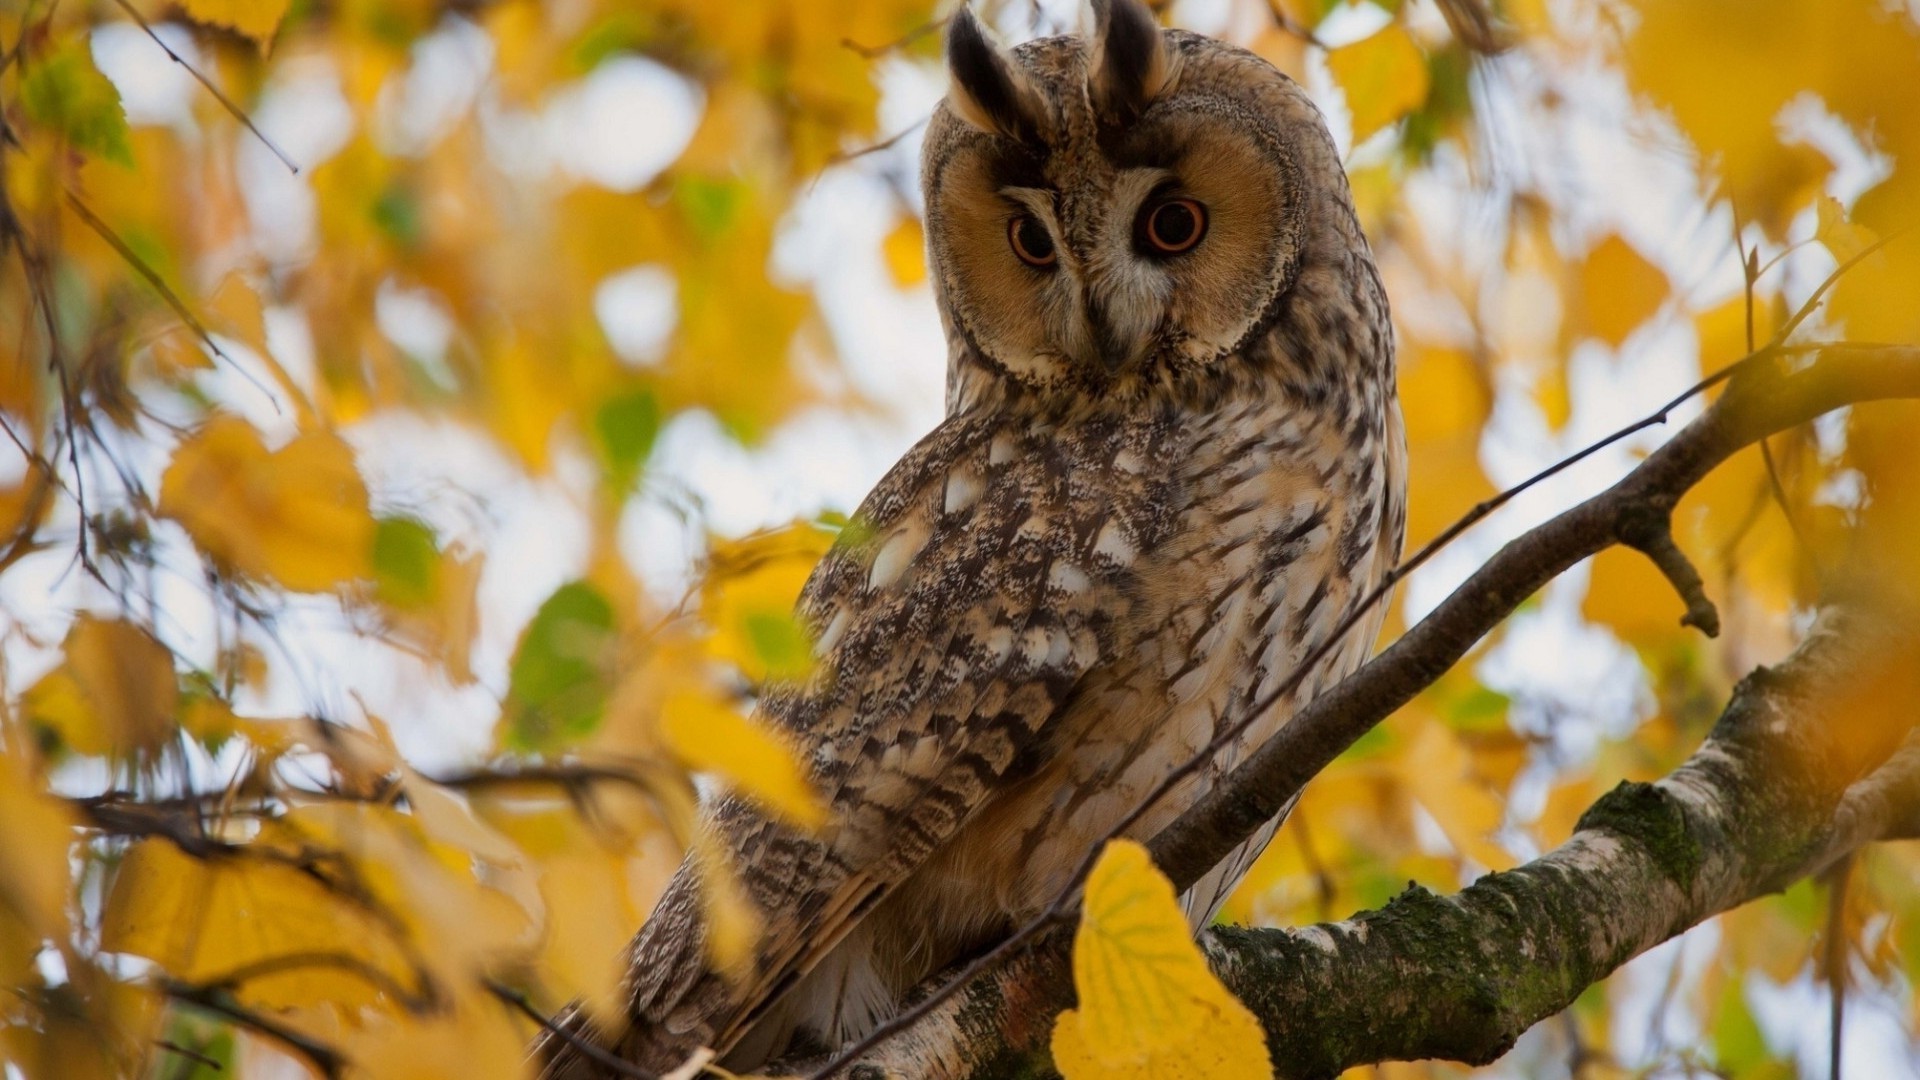 animals tree nature owl bird outdoors wood wildlife leaf